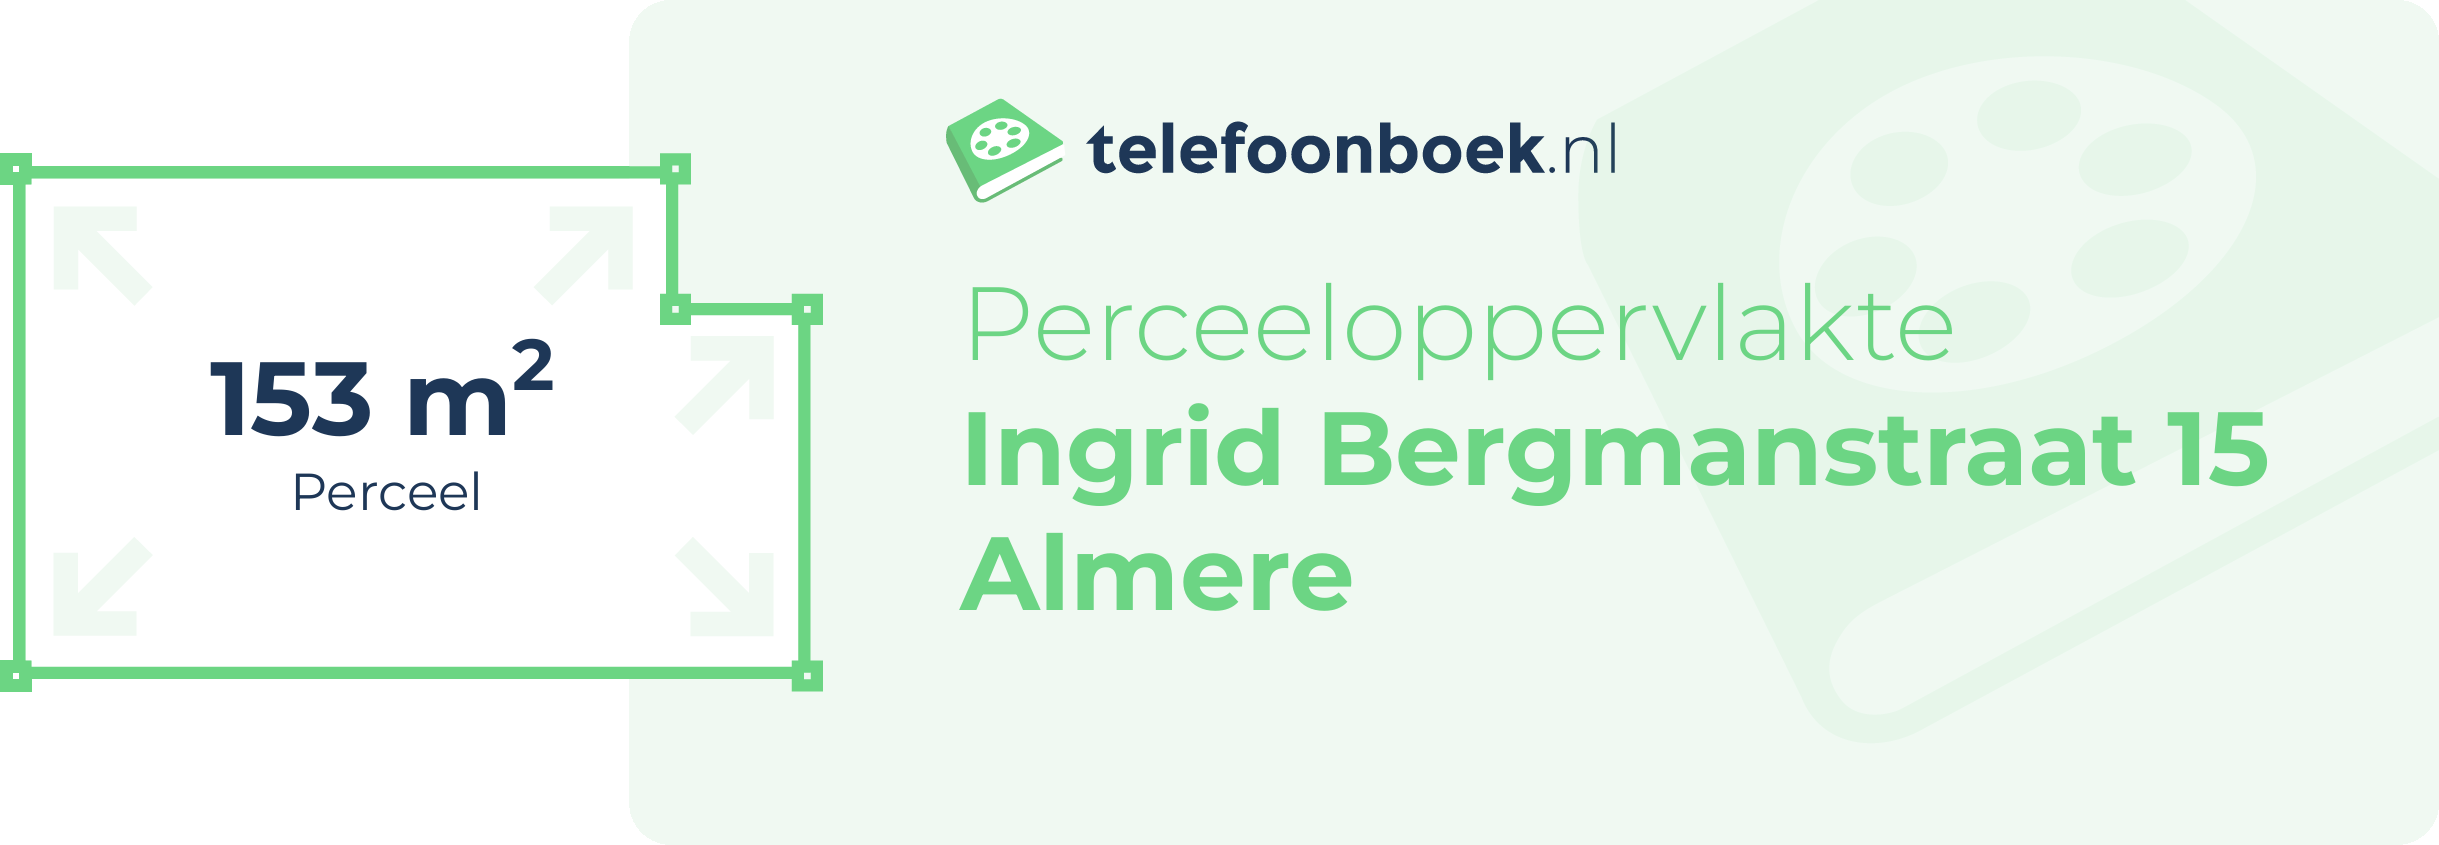 Perceeloppervlakte Ingrid Bergmanstraat 15 Almere